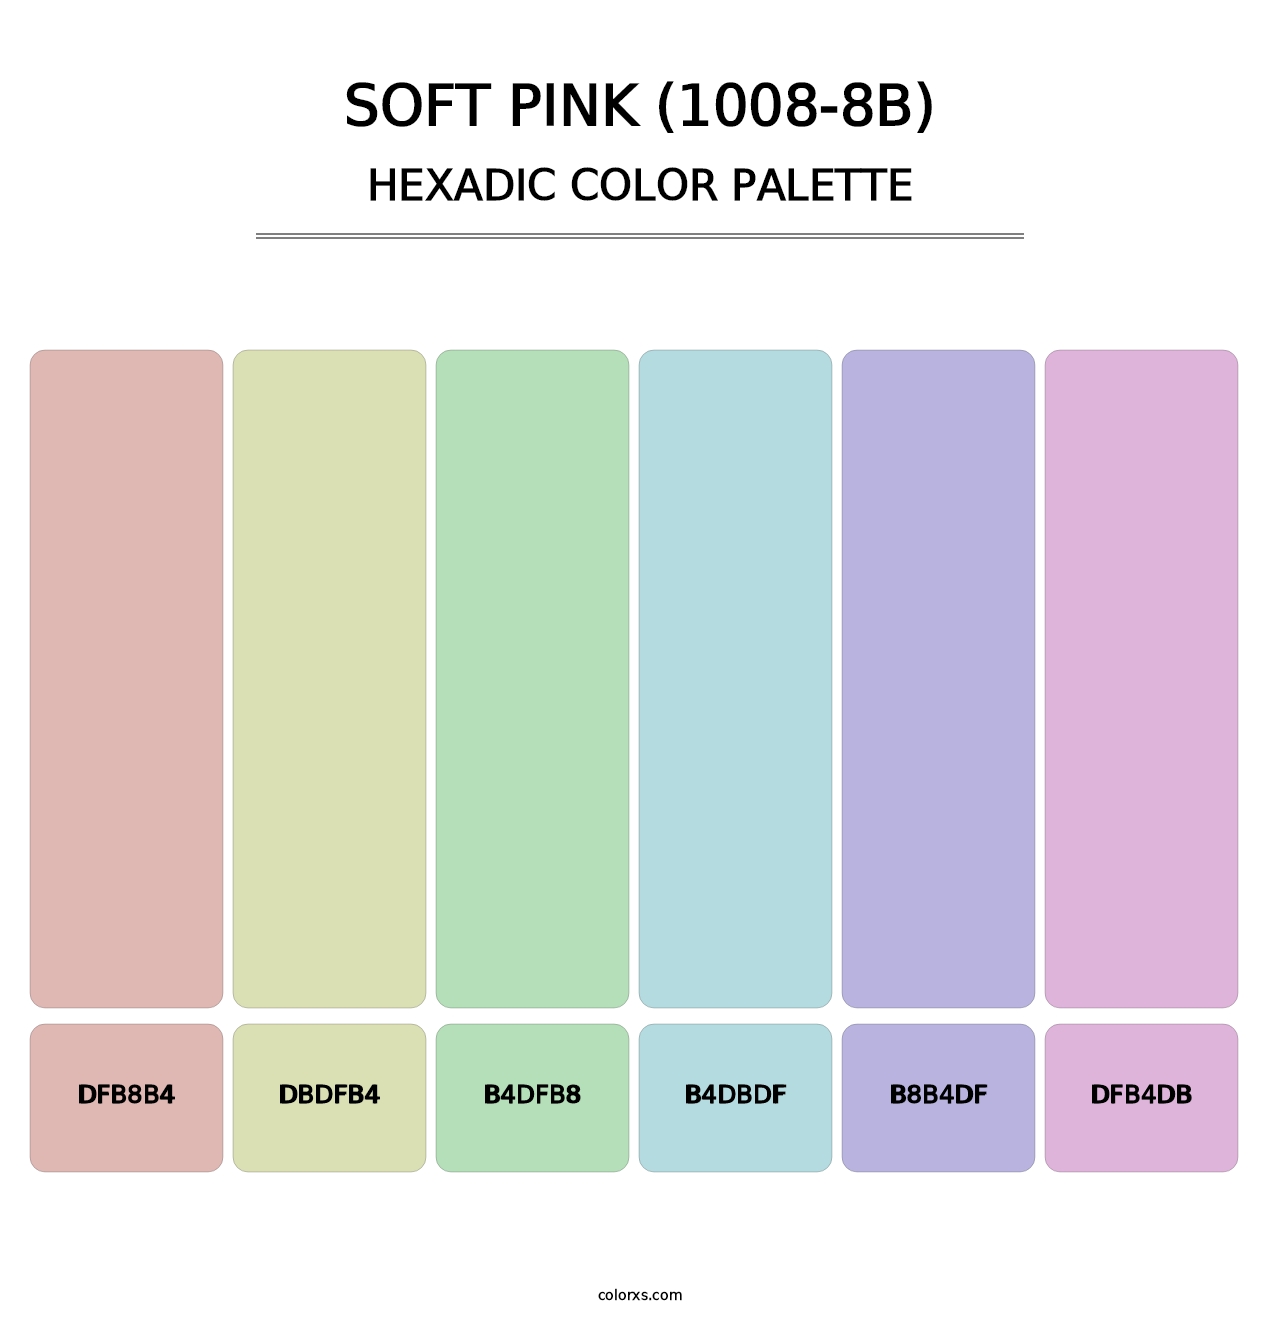 Soft Pink (1008-8B) - Hexadic Color Palette